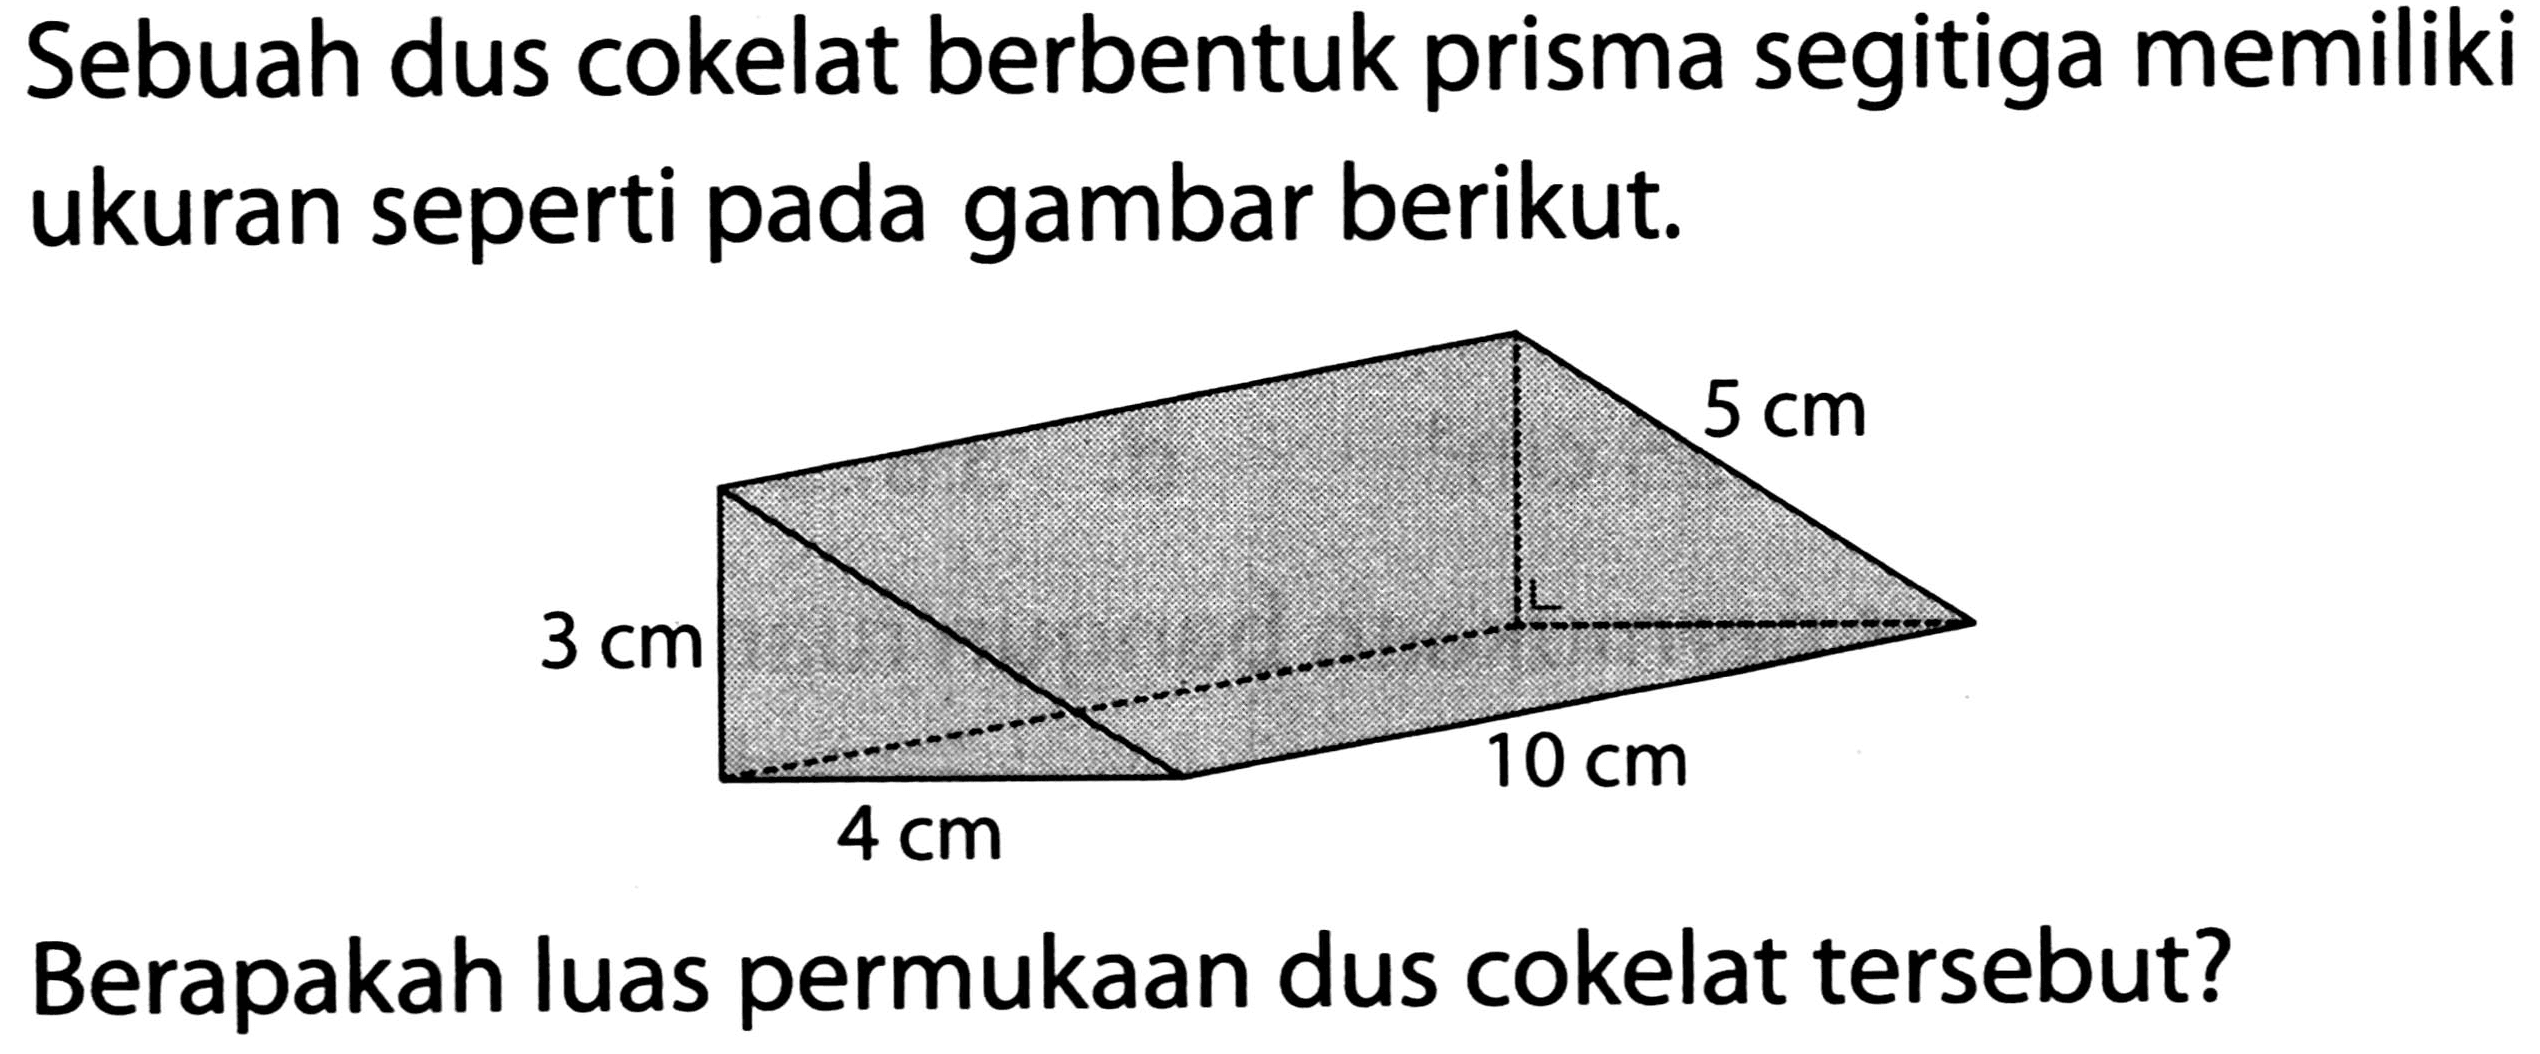 Sebuah dus cokelat berbentuk prisma segitiga memiliki ukuran seperti pada gambar berikut.
Berapakah luas permukaan dus cokelat tersebut?